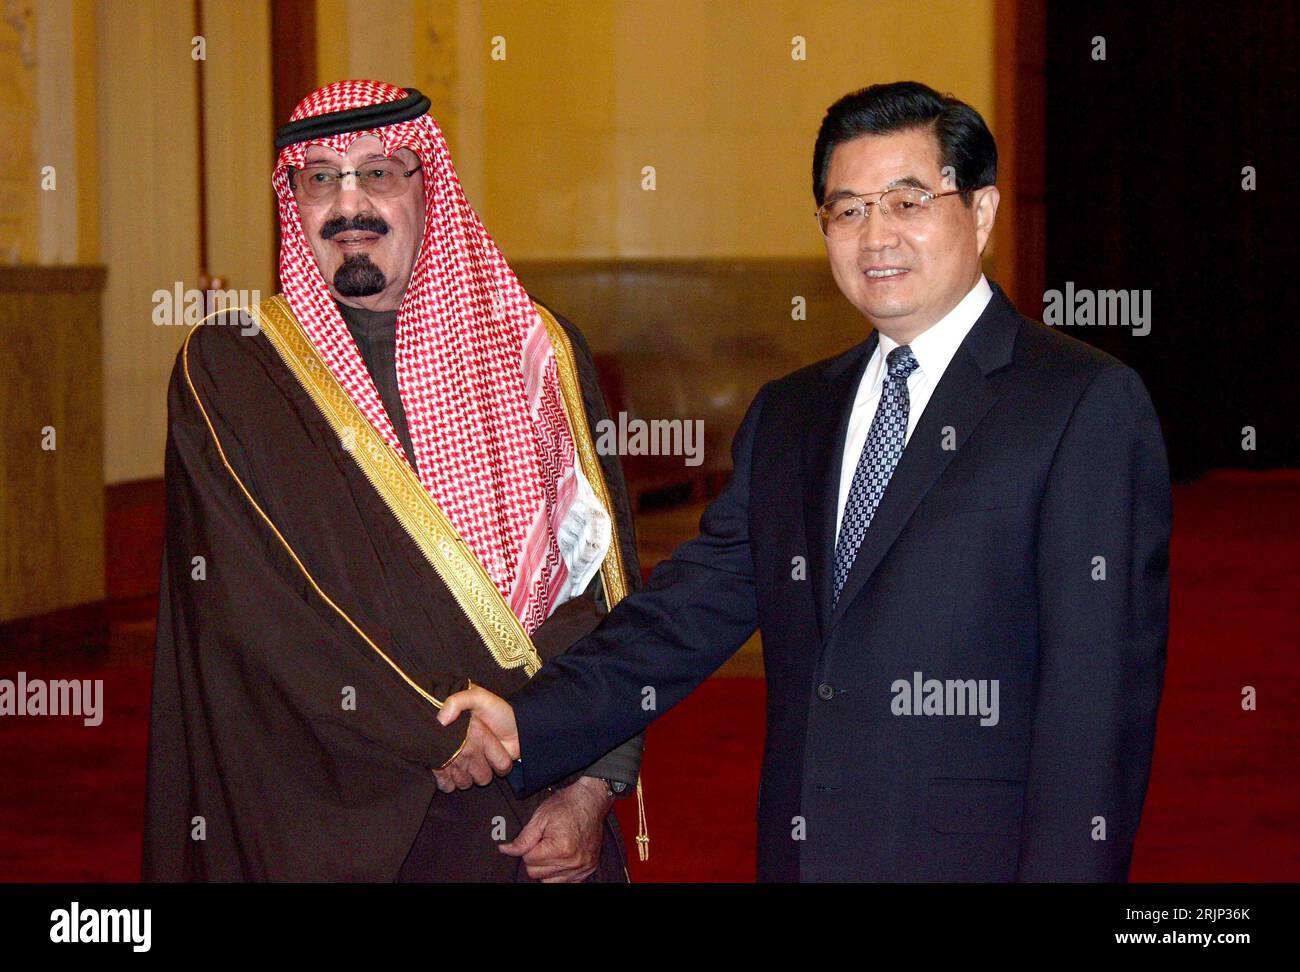 Bildnummer: 51073773  Datum: 23.01.2006  Copyright: imago/Xinhua Hu Jintao (re., CHN/Staatspräsident China) begrüßt den Saudischen König Abdullah bin Abdul-Aziz al Saud (KSA) anlässlich eines Besuches in Beijing - PUBLICATIONxNOTxINxCHN, Personen , optimistisch; 2006, Beijing, Peking, Politiker, Präsident, lächelt, shake hands, shakehands, Händeschütteln, Hände schütteln, Pressetermin , Könige, saudischer, Staatsbesuch, Staatsbesuche, Besuch, Besuche, Abdulaziz; , quer, Kbdig, Gruppenbild, close, Internationale Politik, Politik, China, Randbild, People  König Abdullah bin Abdul Aziz Al Saud Ab Stock Photo